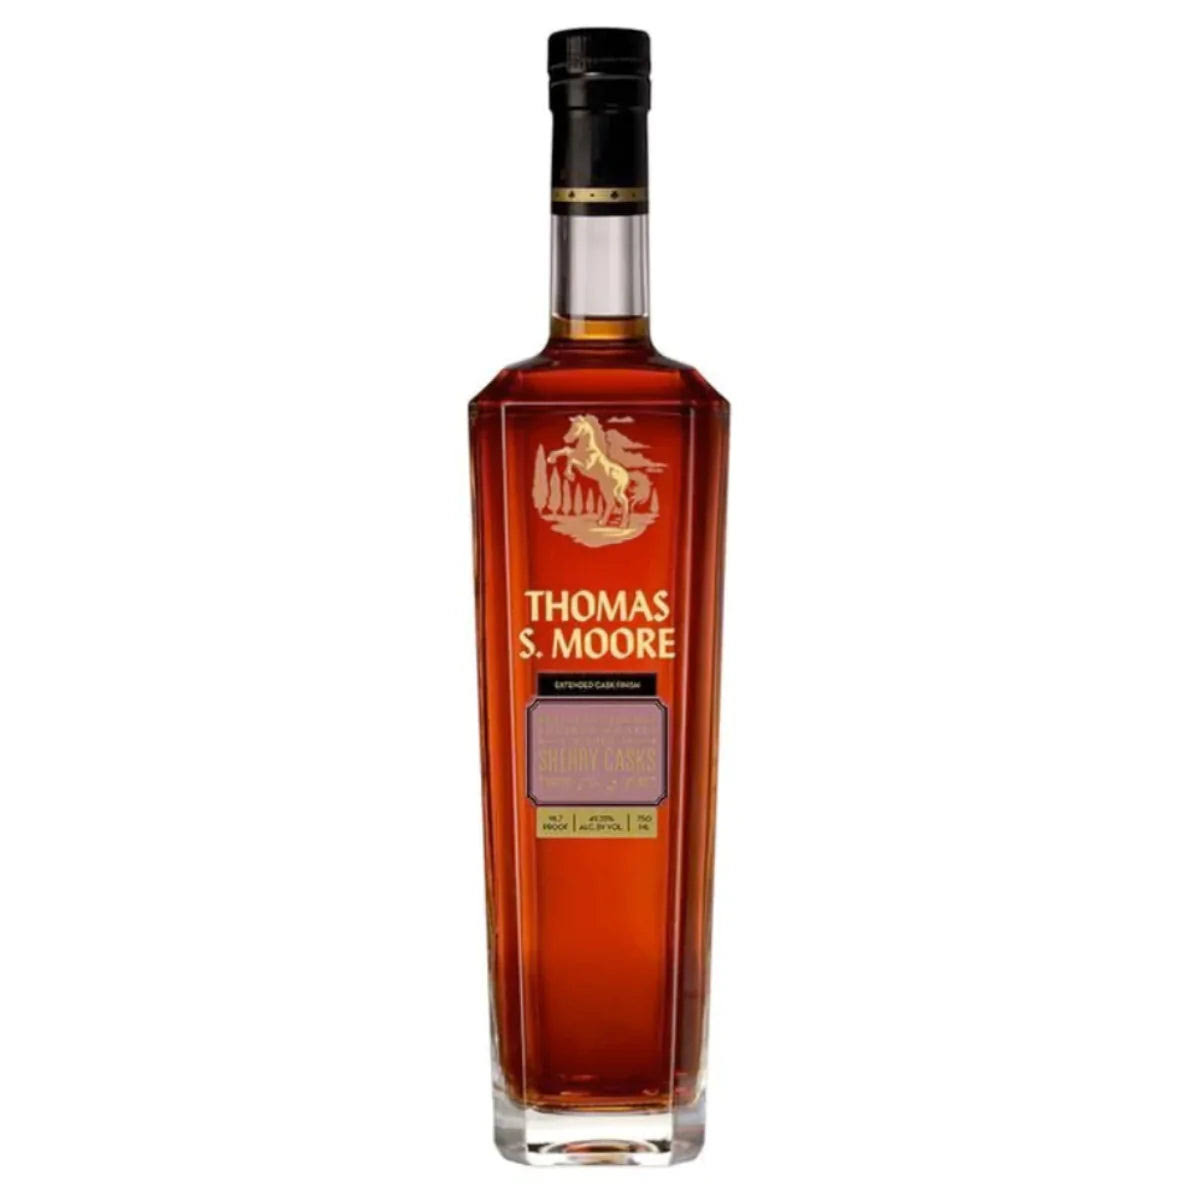 Thomas S Moore Sherry Cask Bourbon 750ml